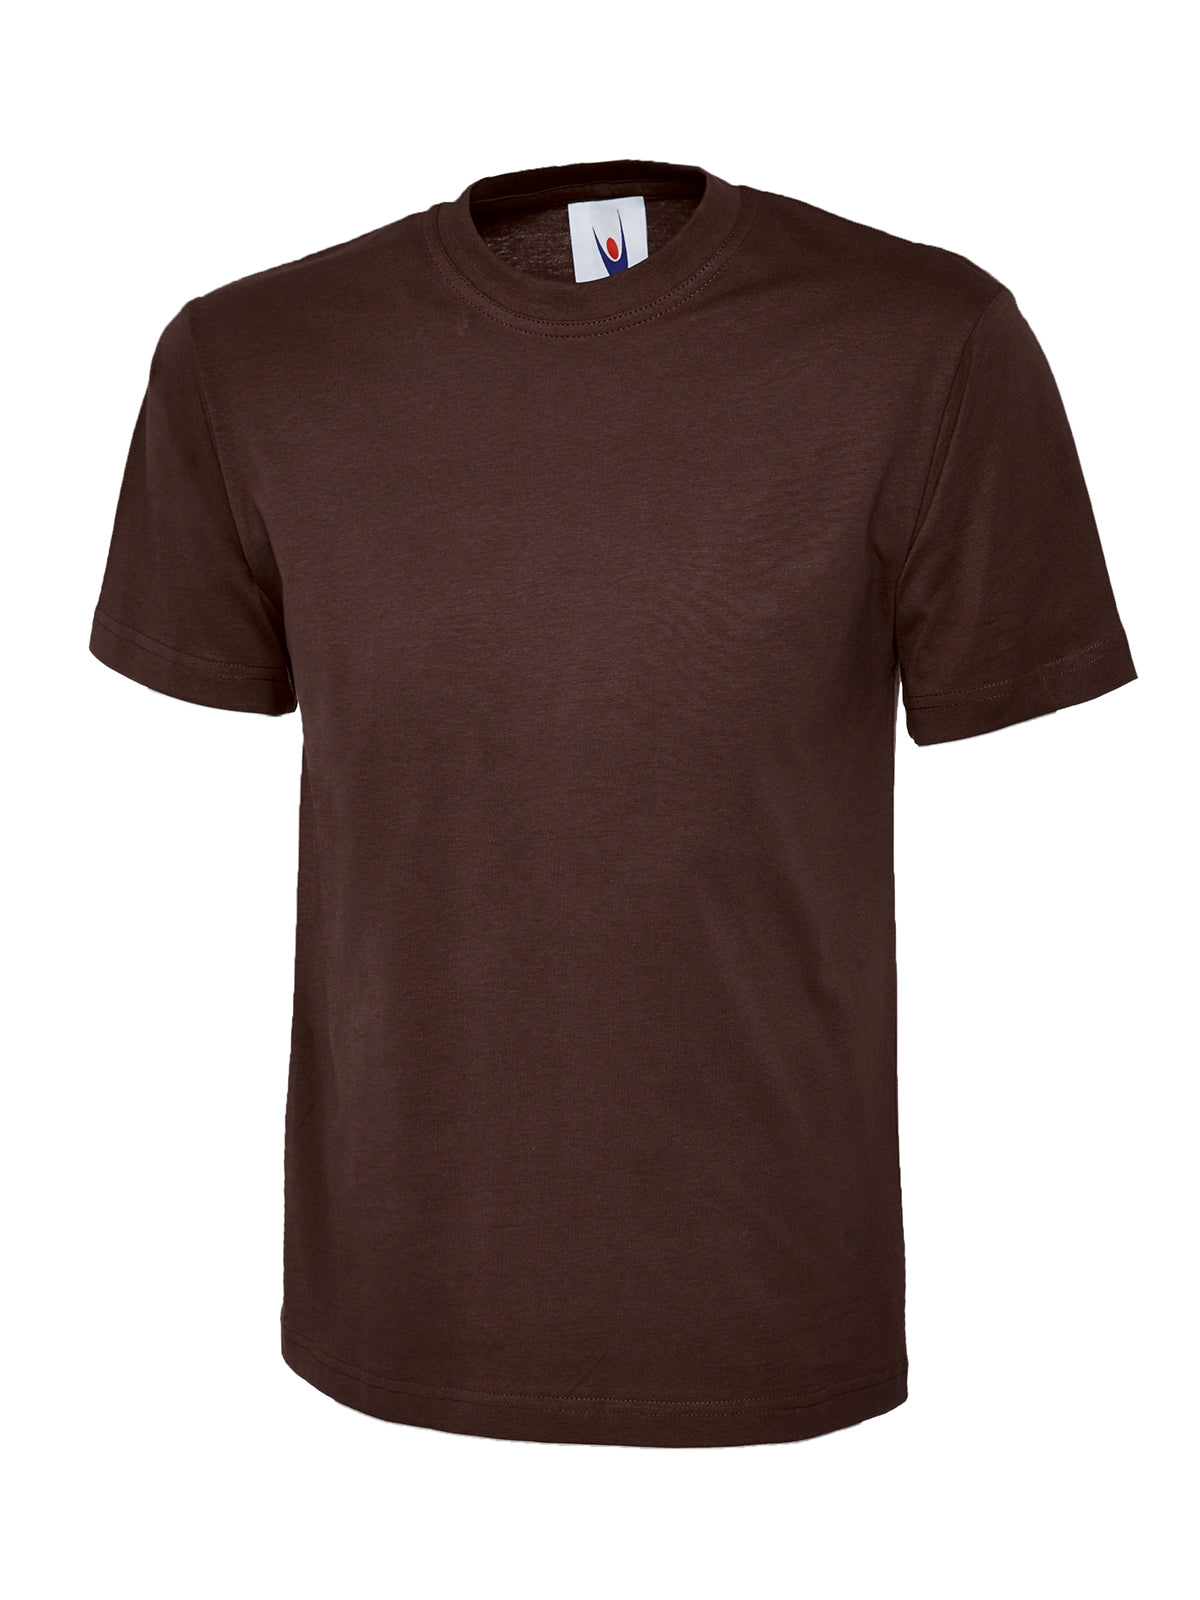 Uneek Classic T-shirt UC301 - Brown